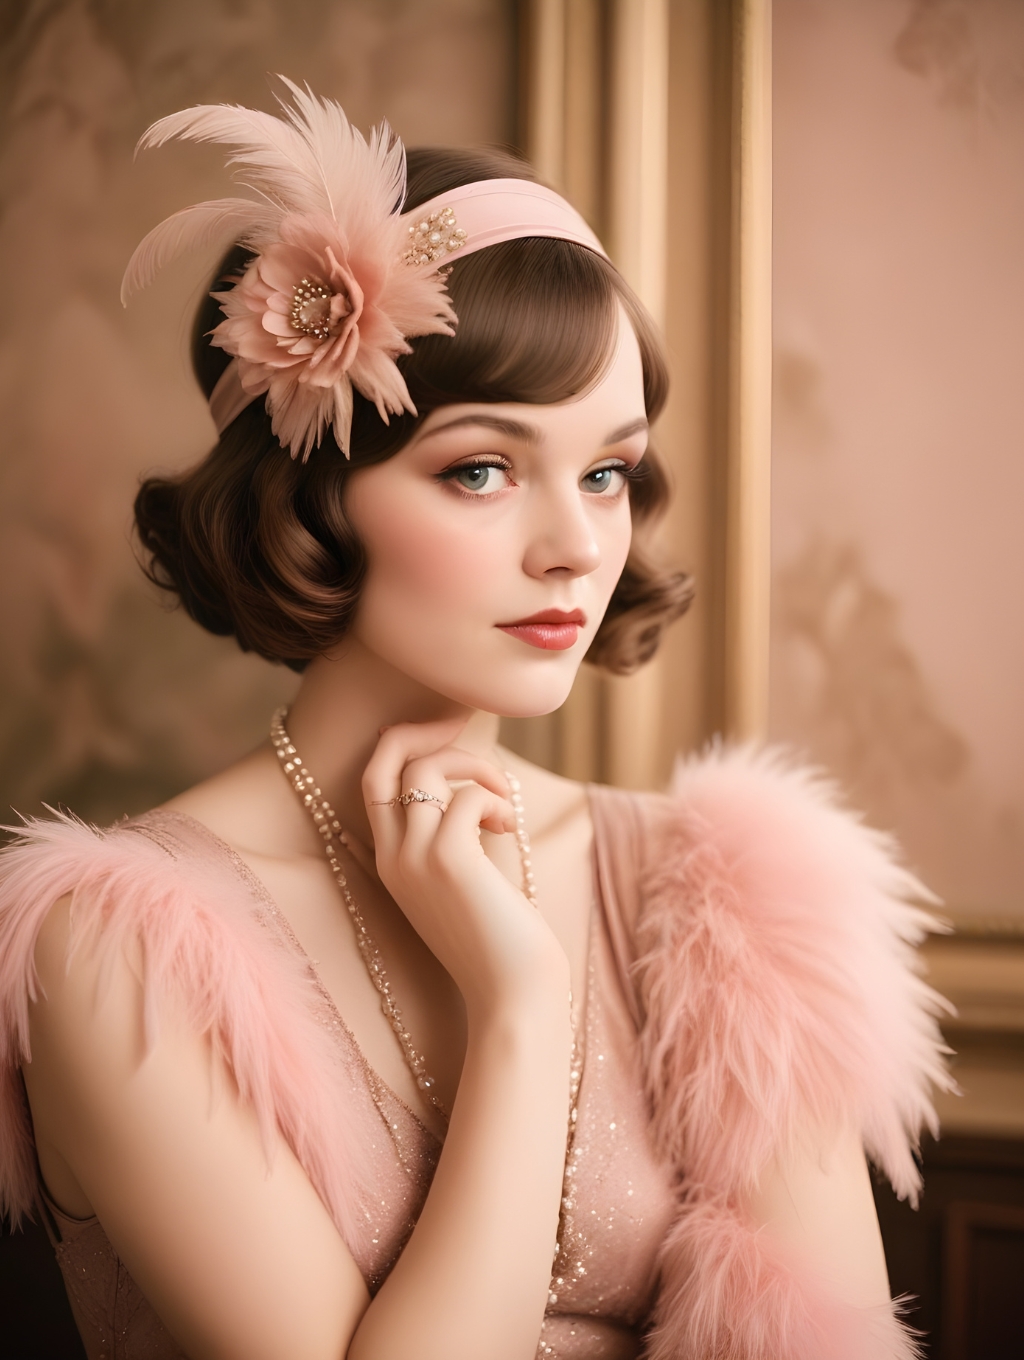 Gatsby Portraits Women: Image Frames & Self-Portraits-Theme:3